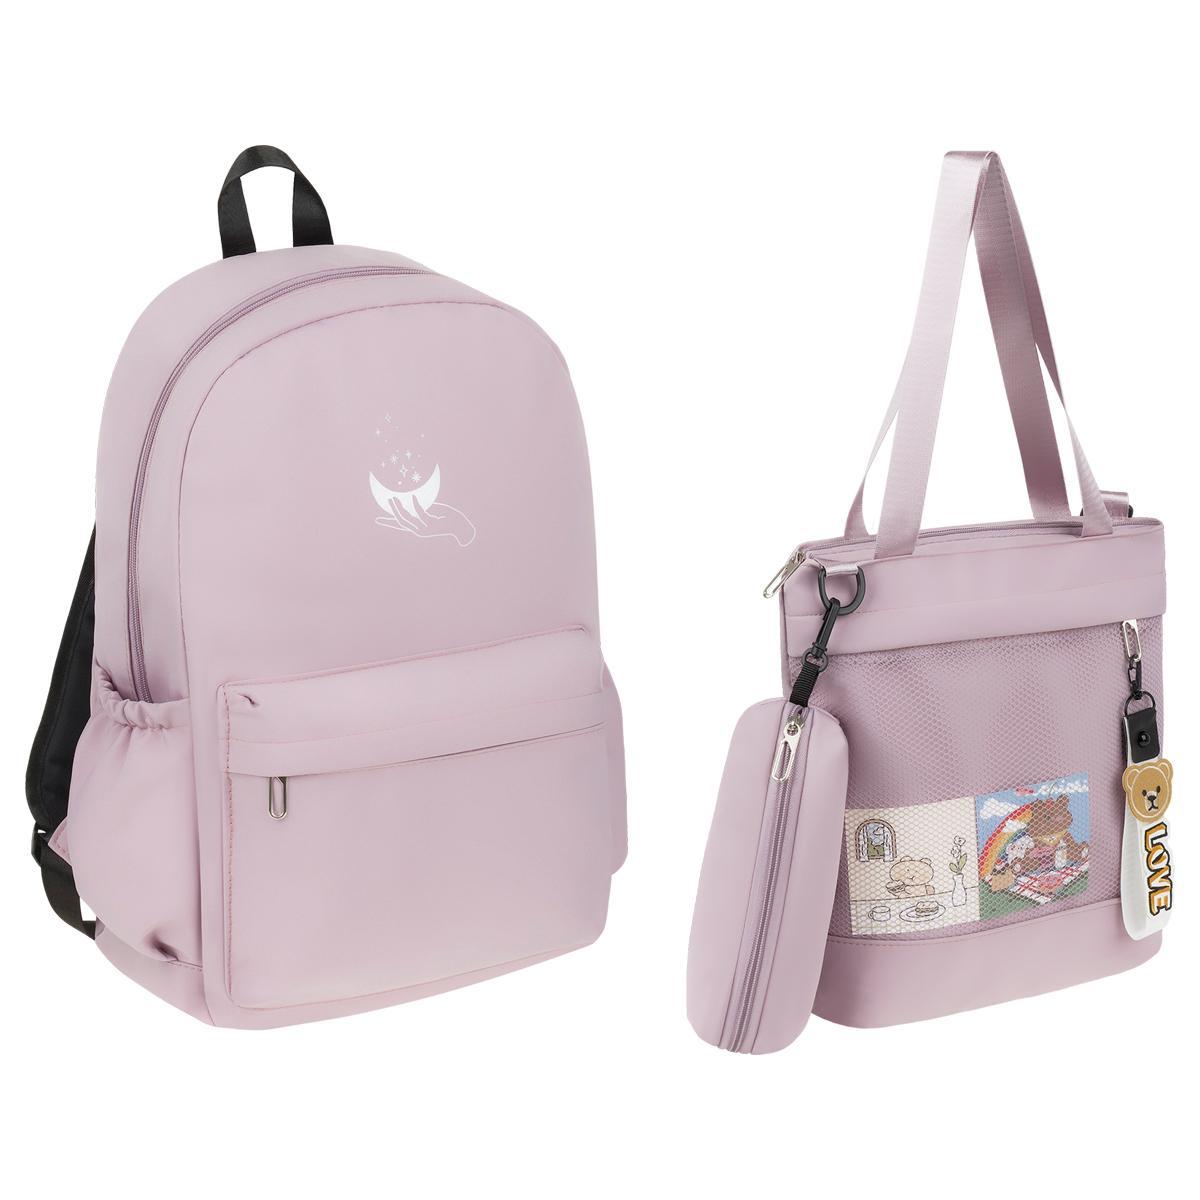 Рюкзак MESHU "Secret", 43*30*13см, 1 отделение, 3 кармана, уплотн. спинка, в комплекте сумка-шоппер 